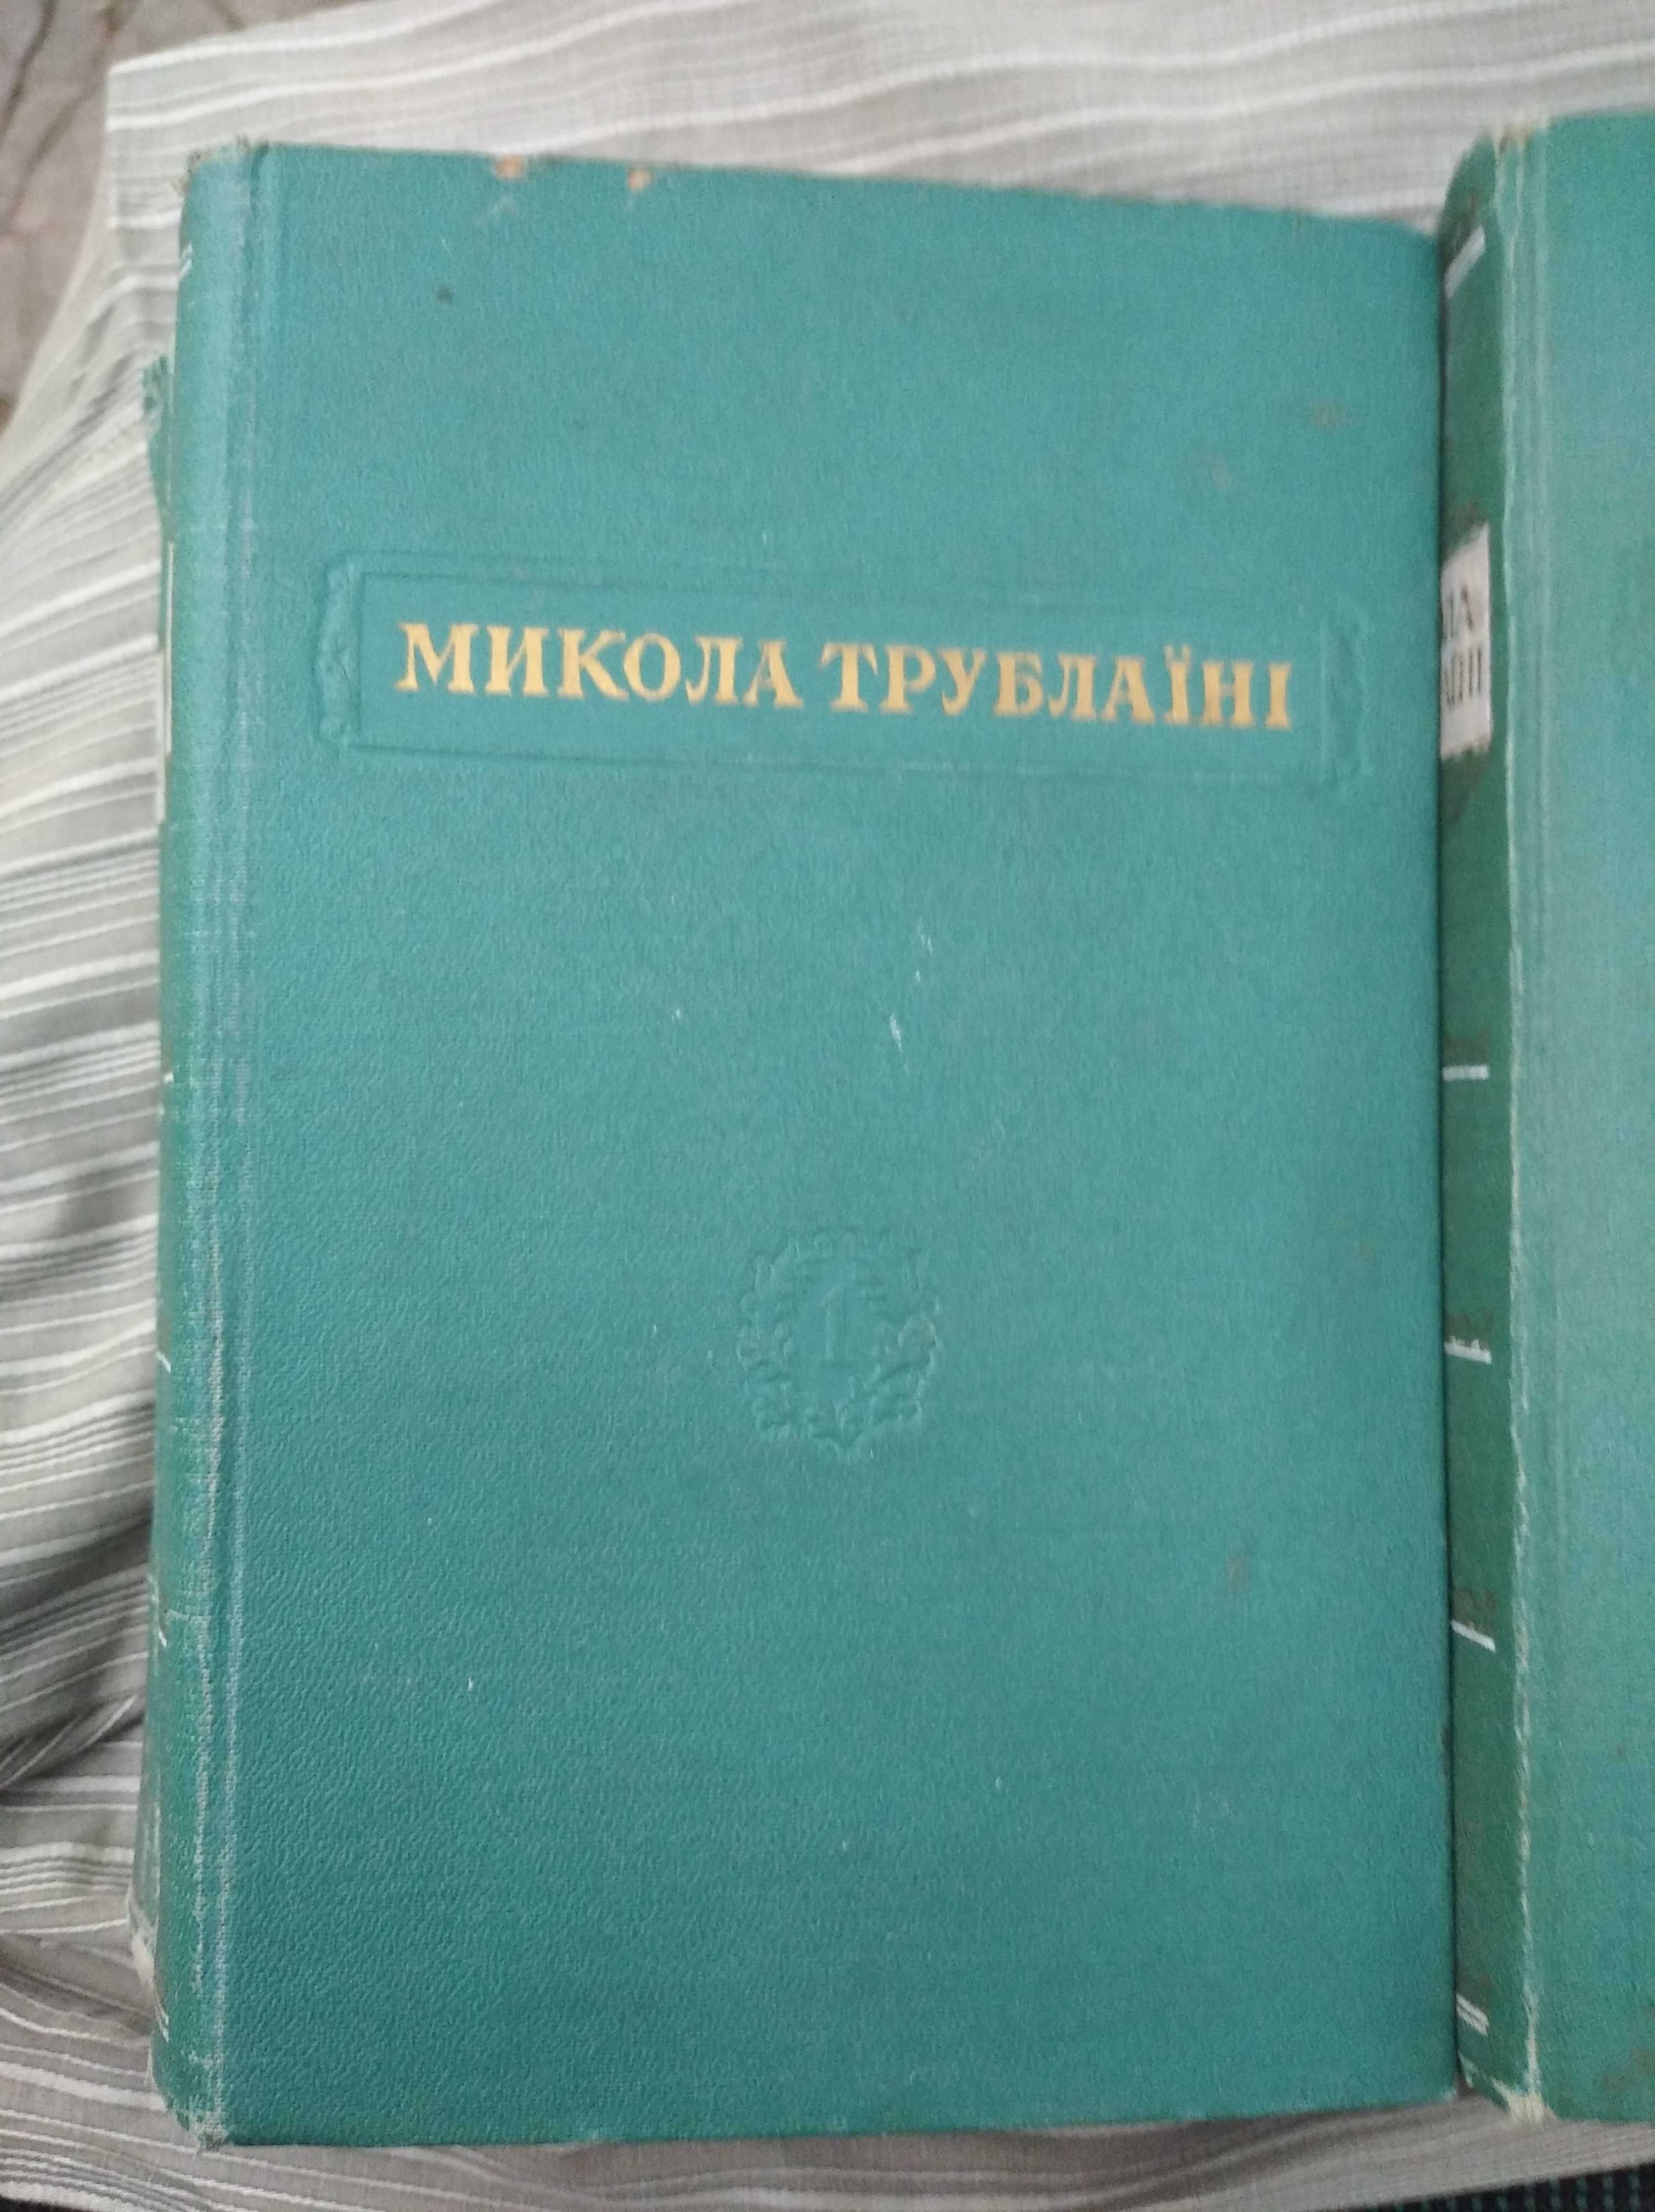 Микола Трублаини в 4 томах 1955-56